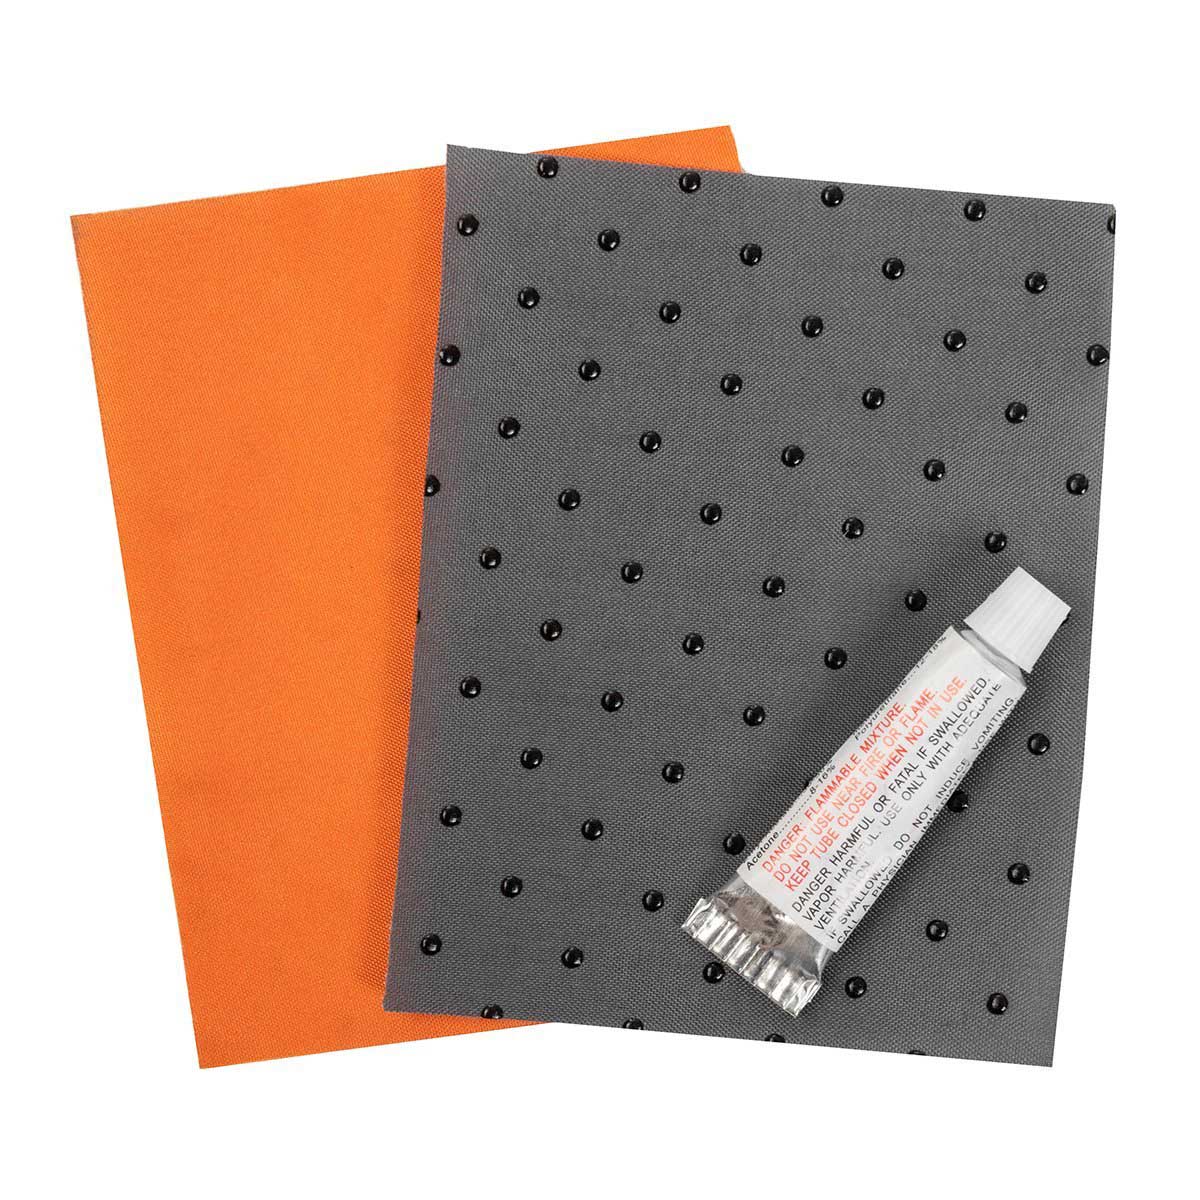 Repair Kit for Orange Self Inflating Sleeping Pad with Pillow